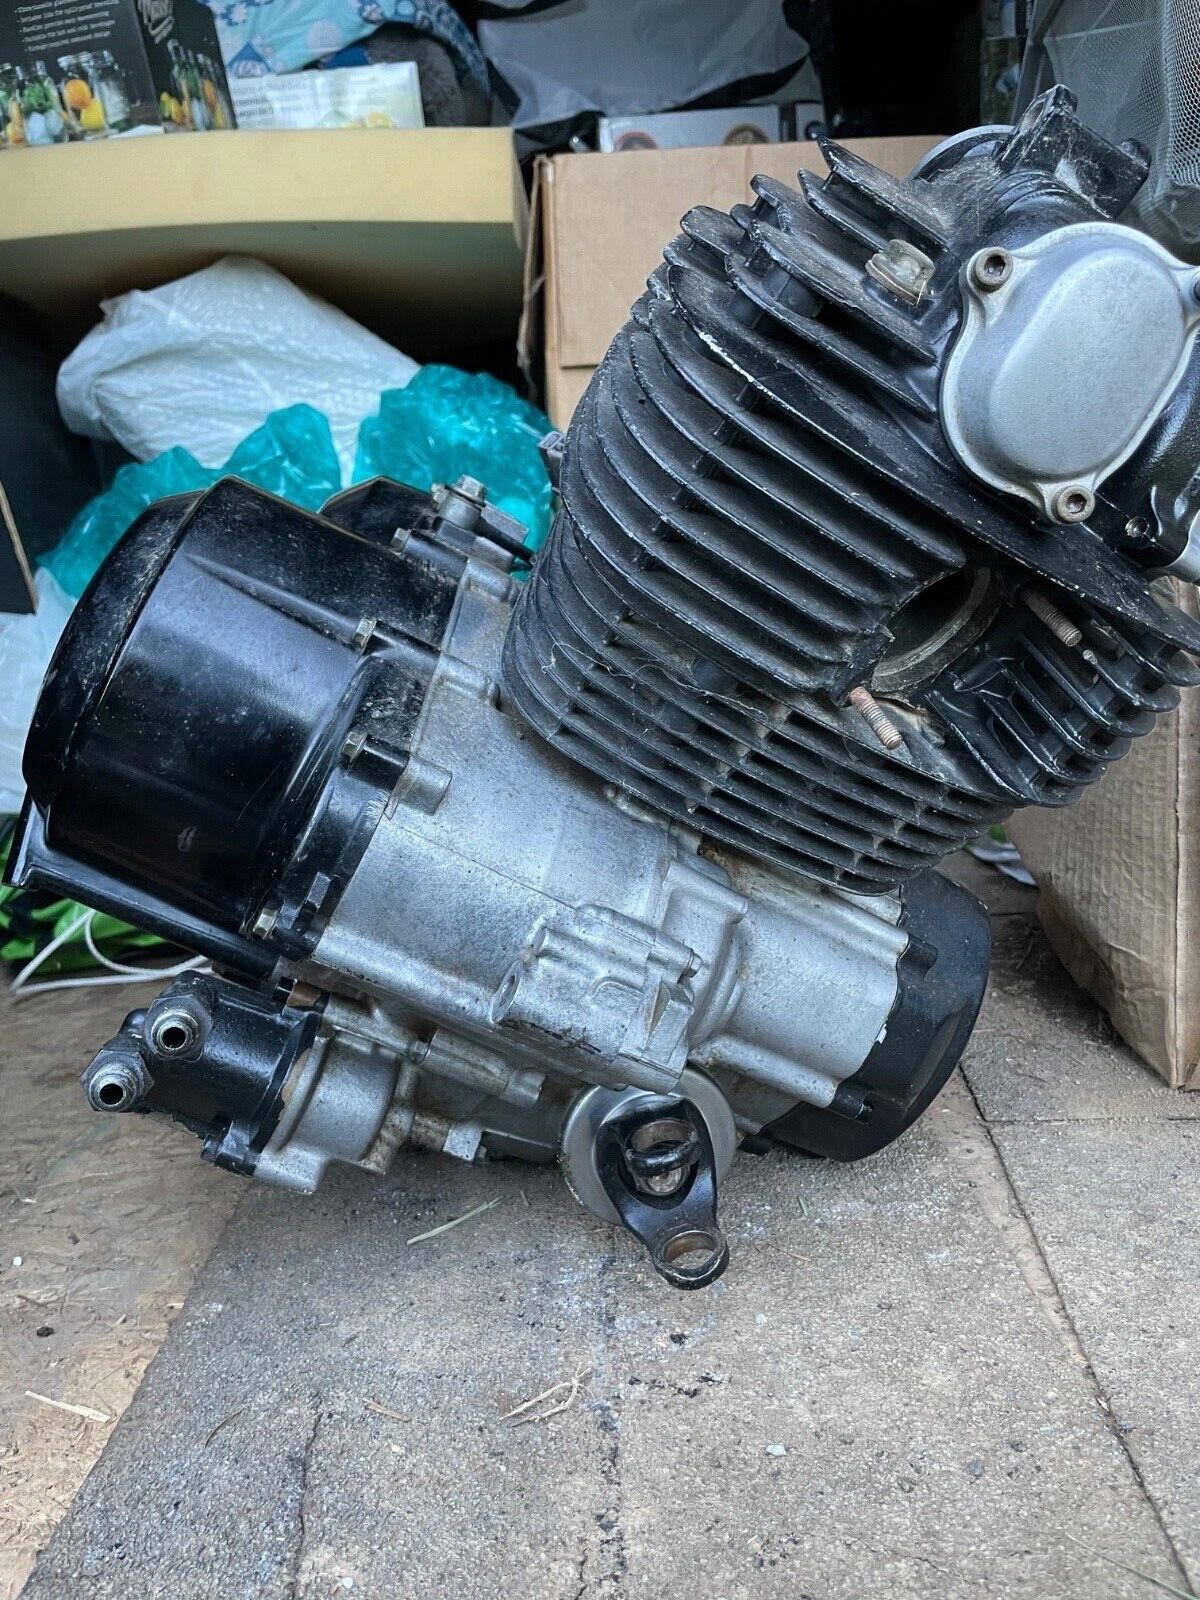 96 Yamaha Wolverine YMF 350 4x4 motor | eBay